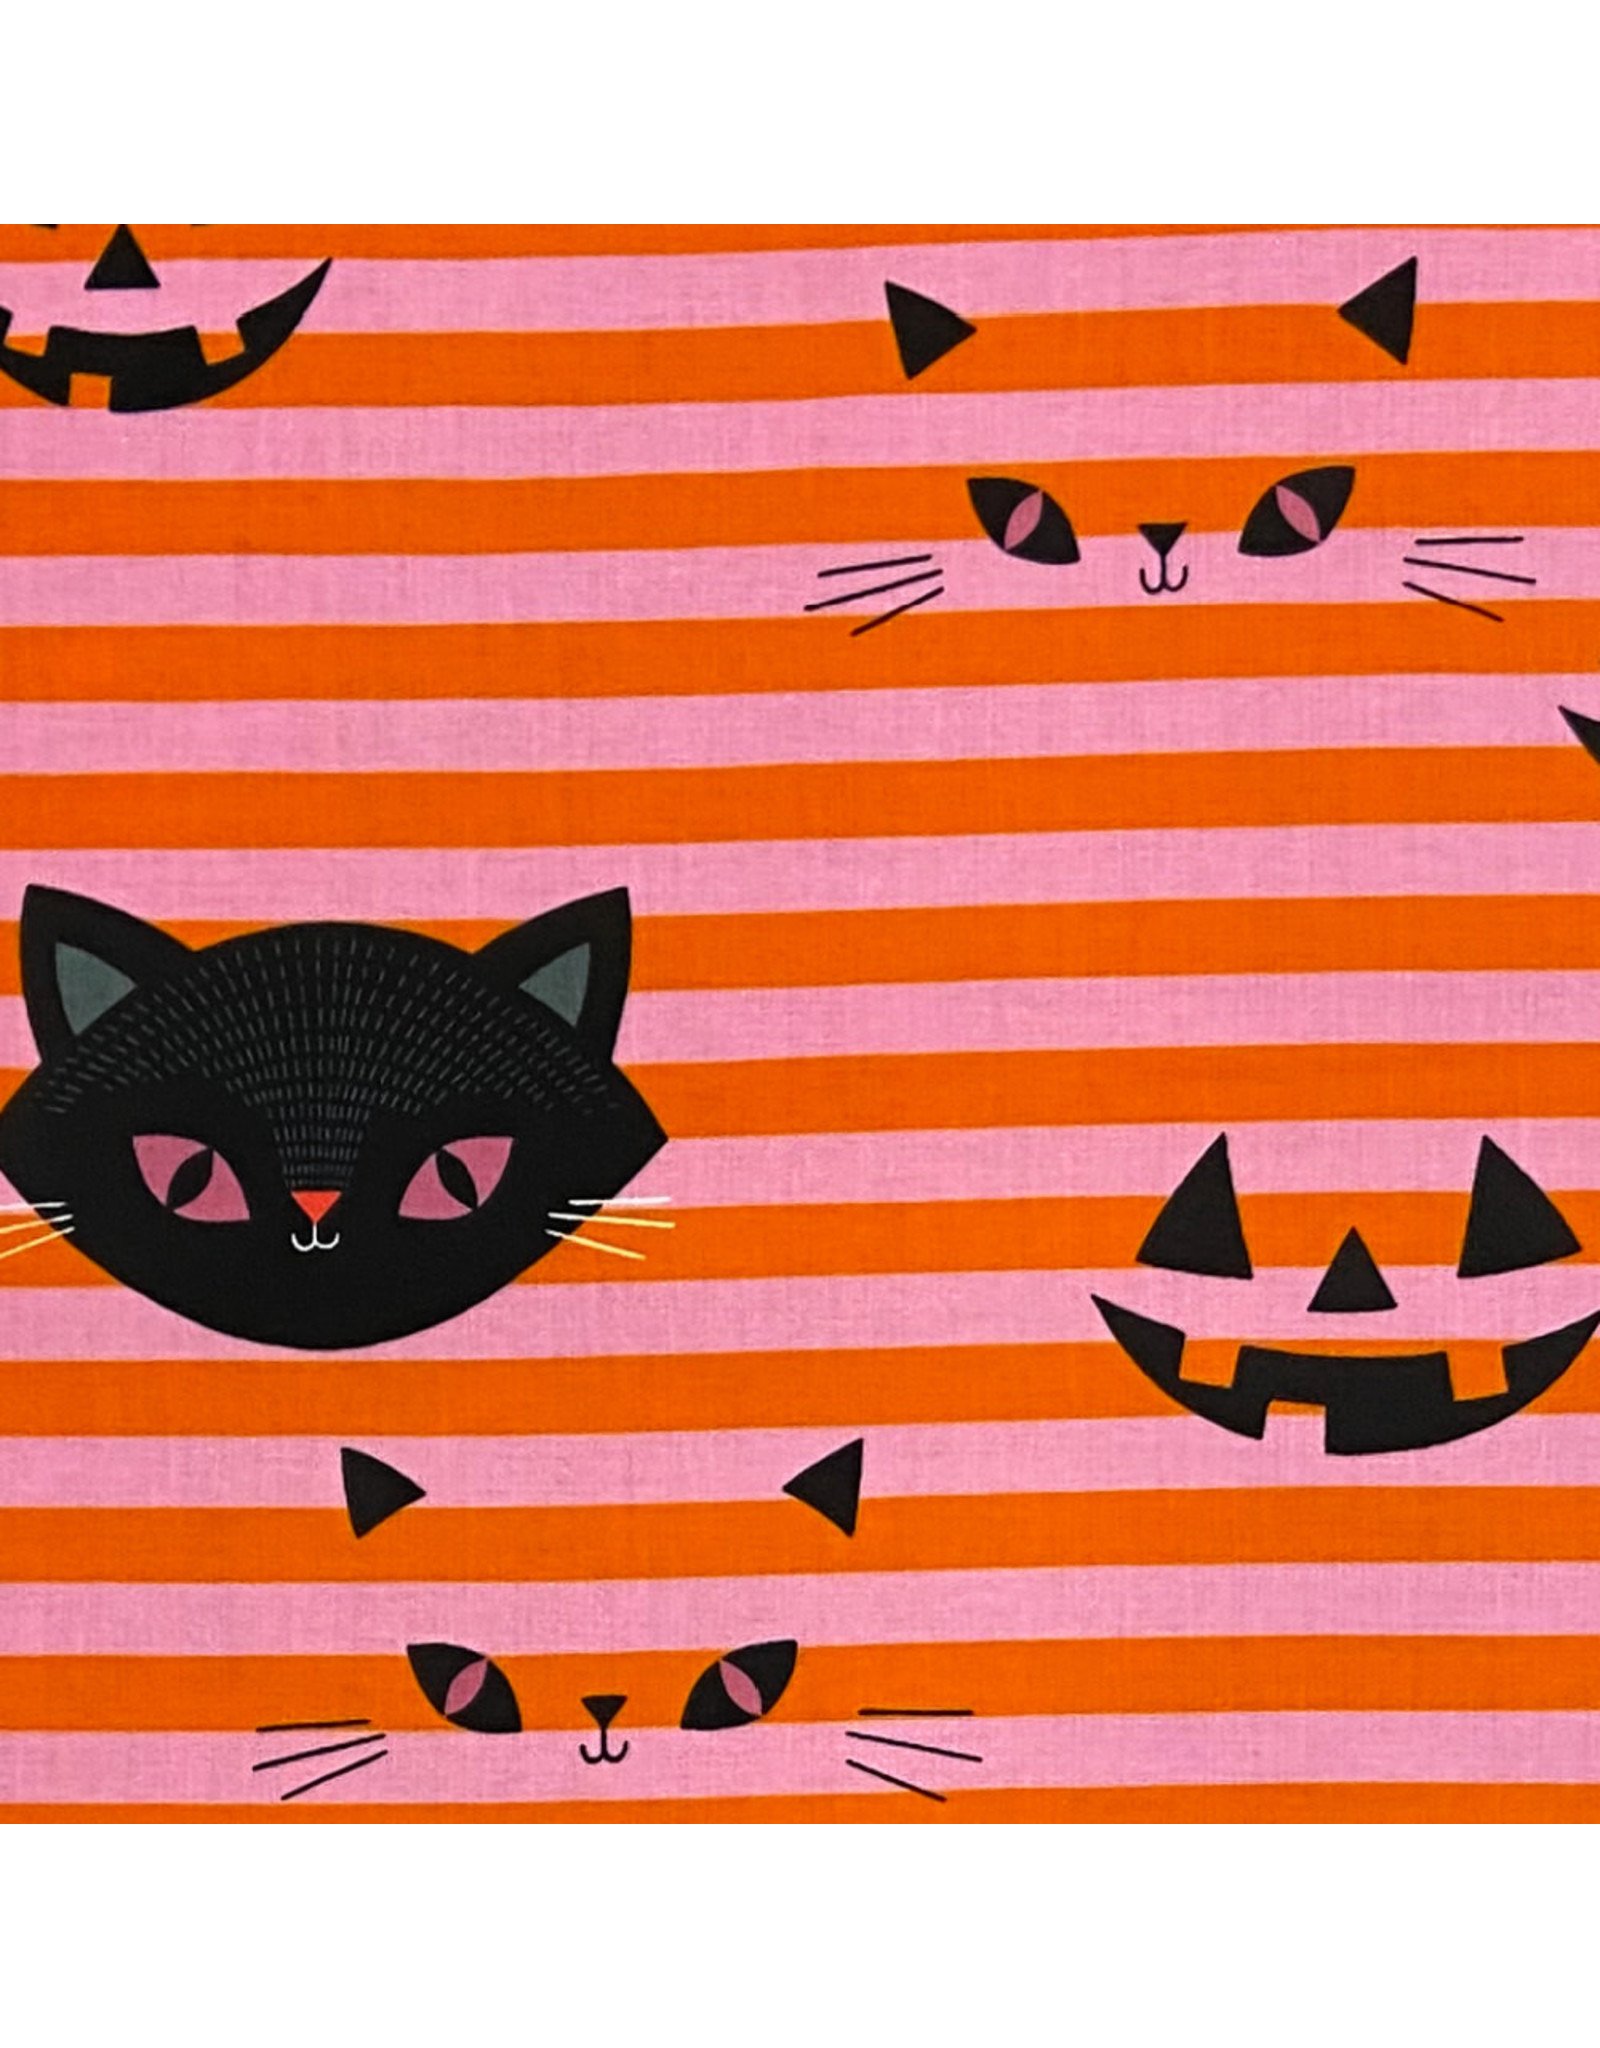 Alexander Henry Fabrics Haunted House, Hide-N-Go Kitty in Pink Orange, Fabric Half-Yards